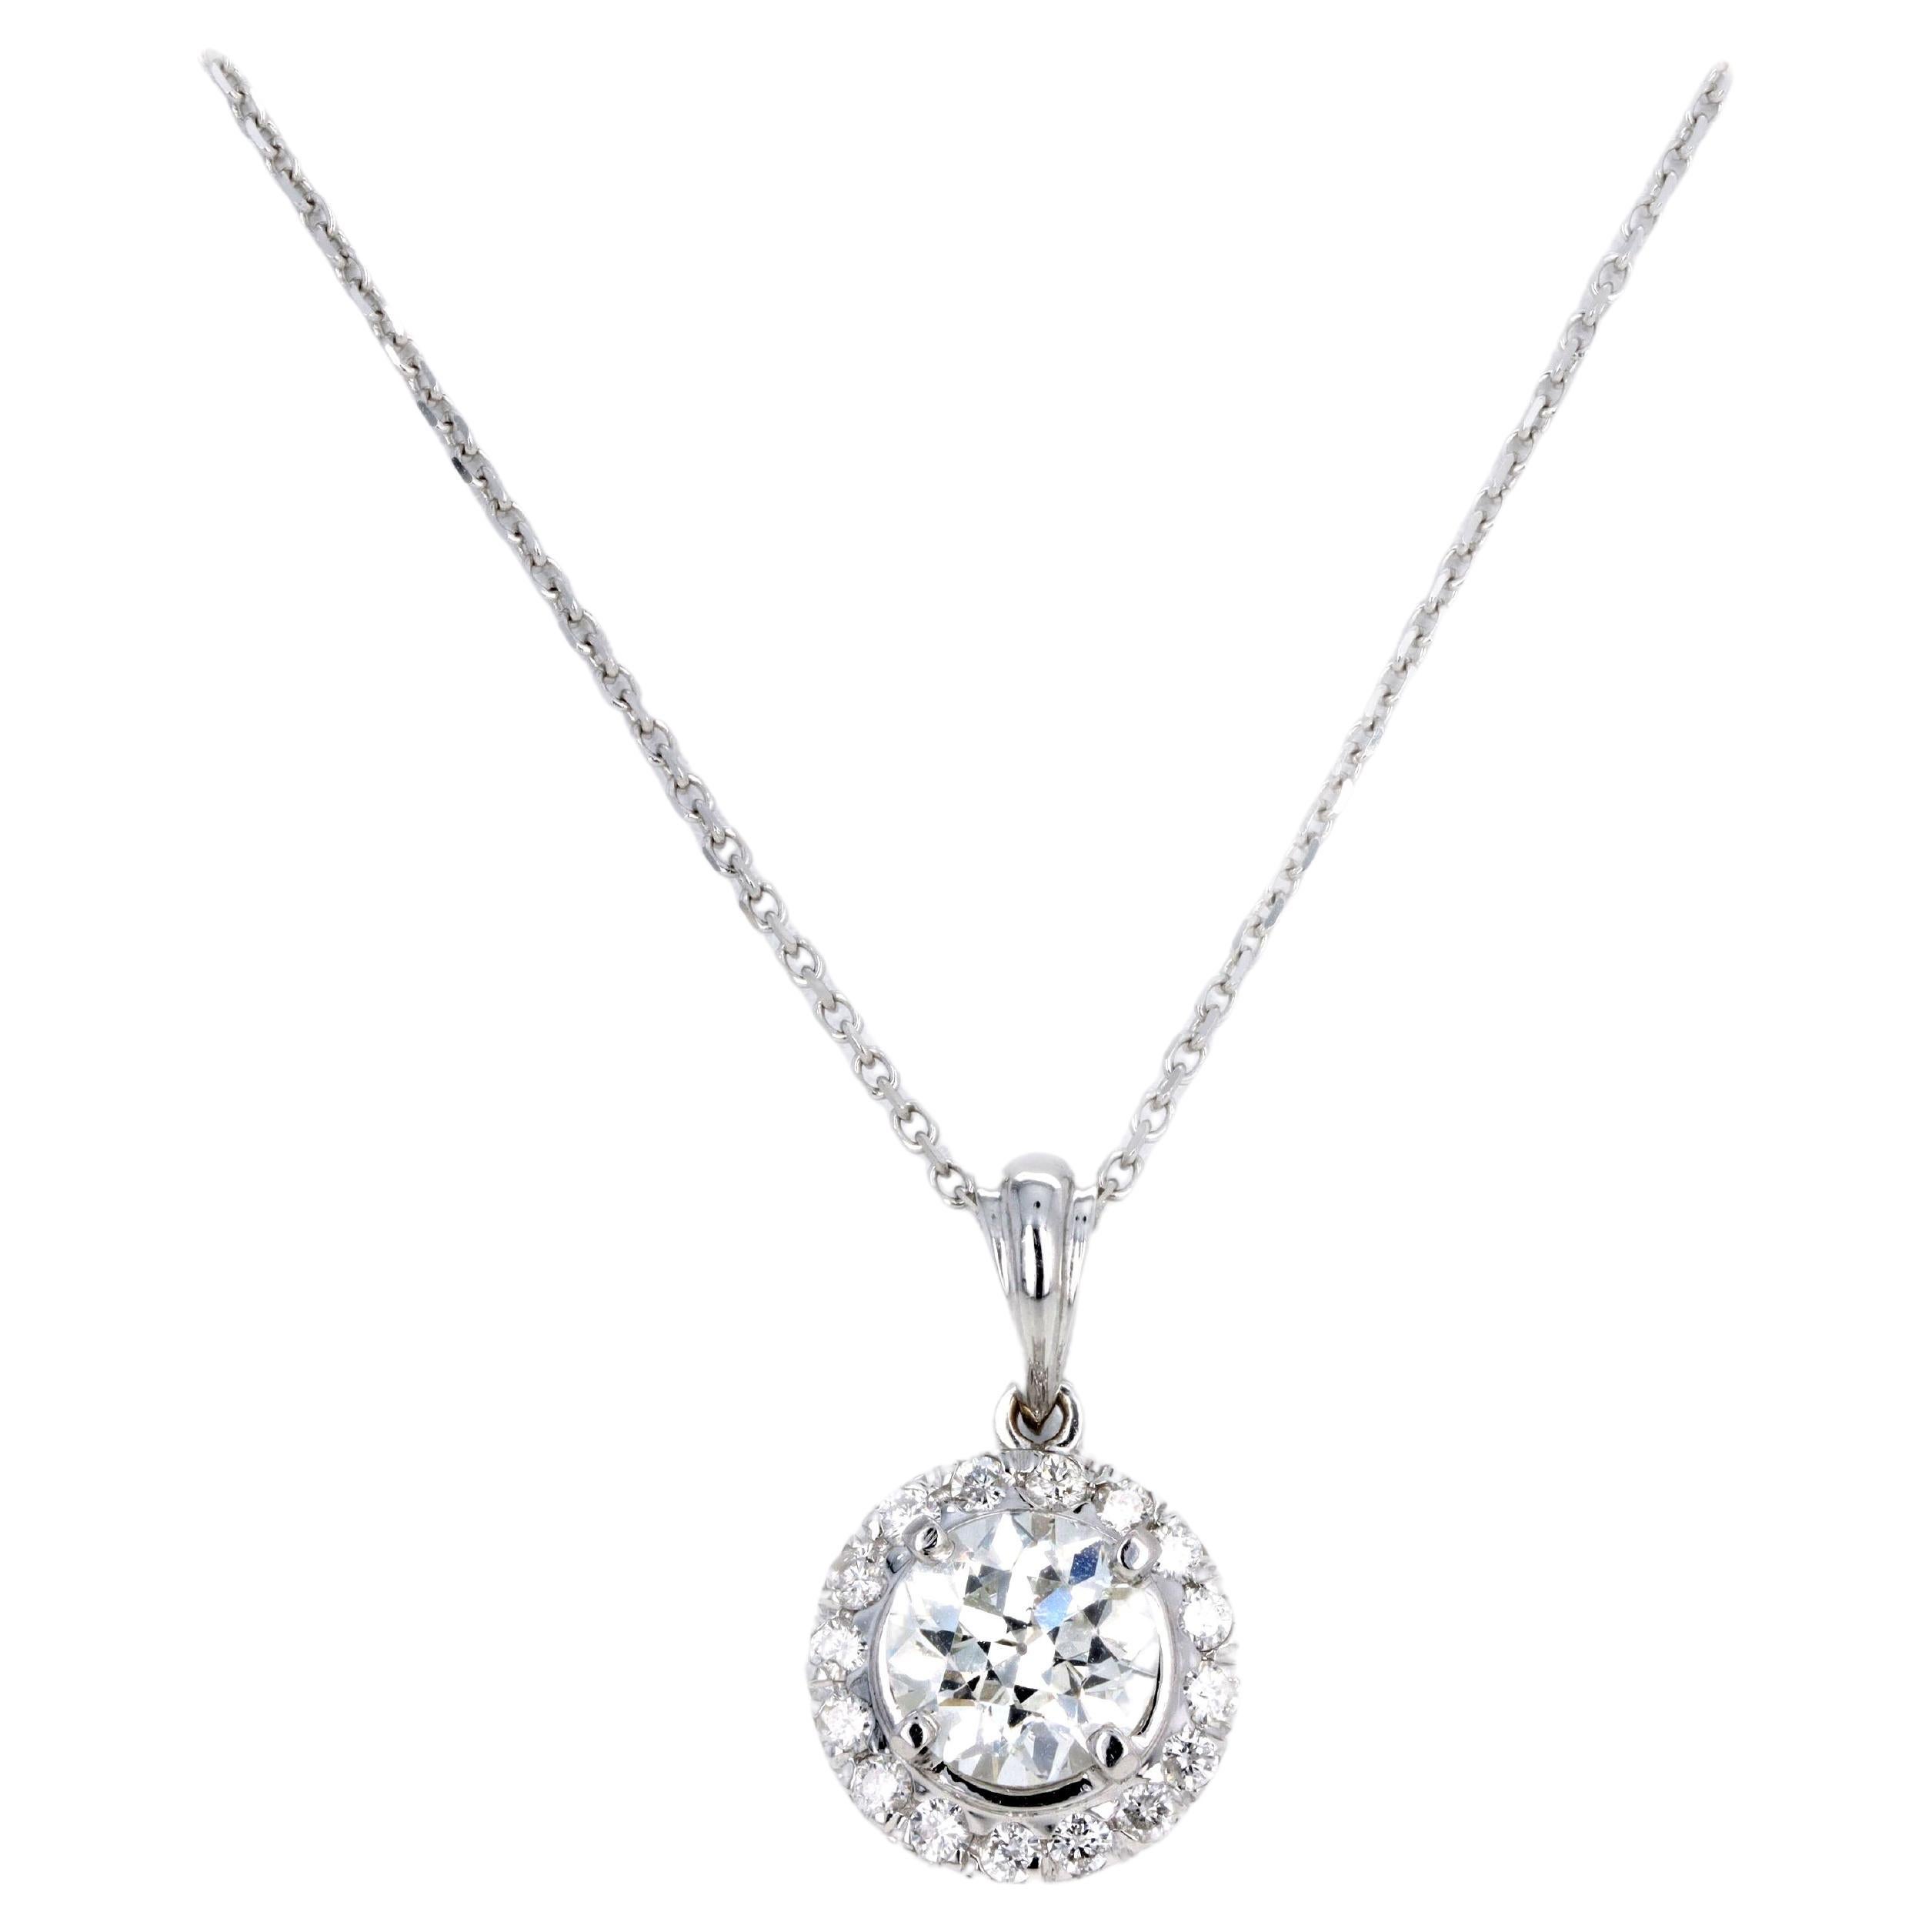 1.10 Carat Old European Diamond Halo Pendant Necklace in 18K White Gold